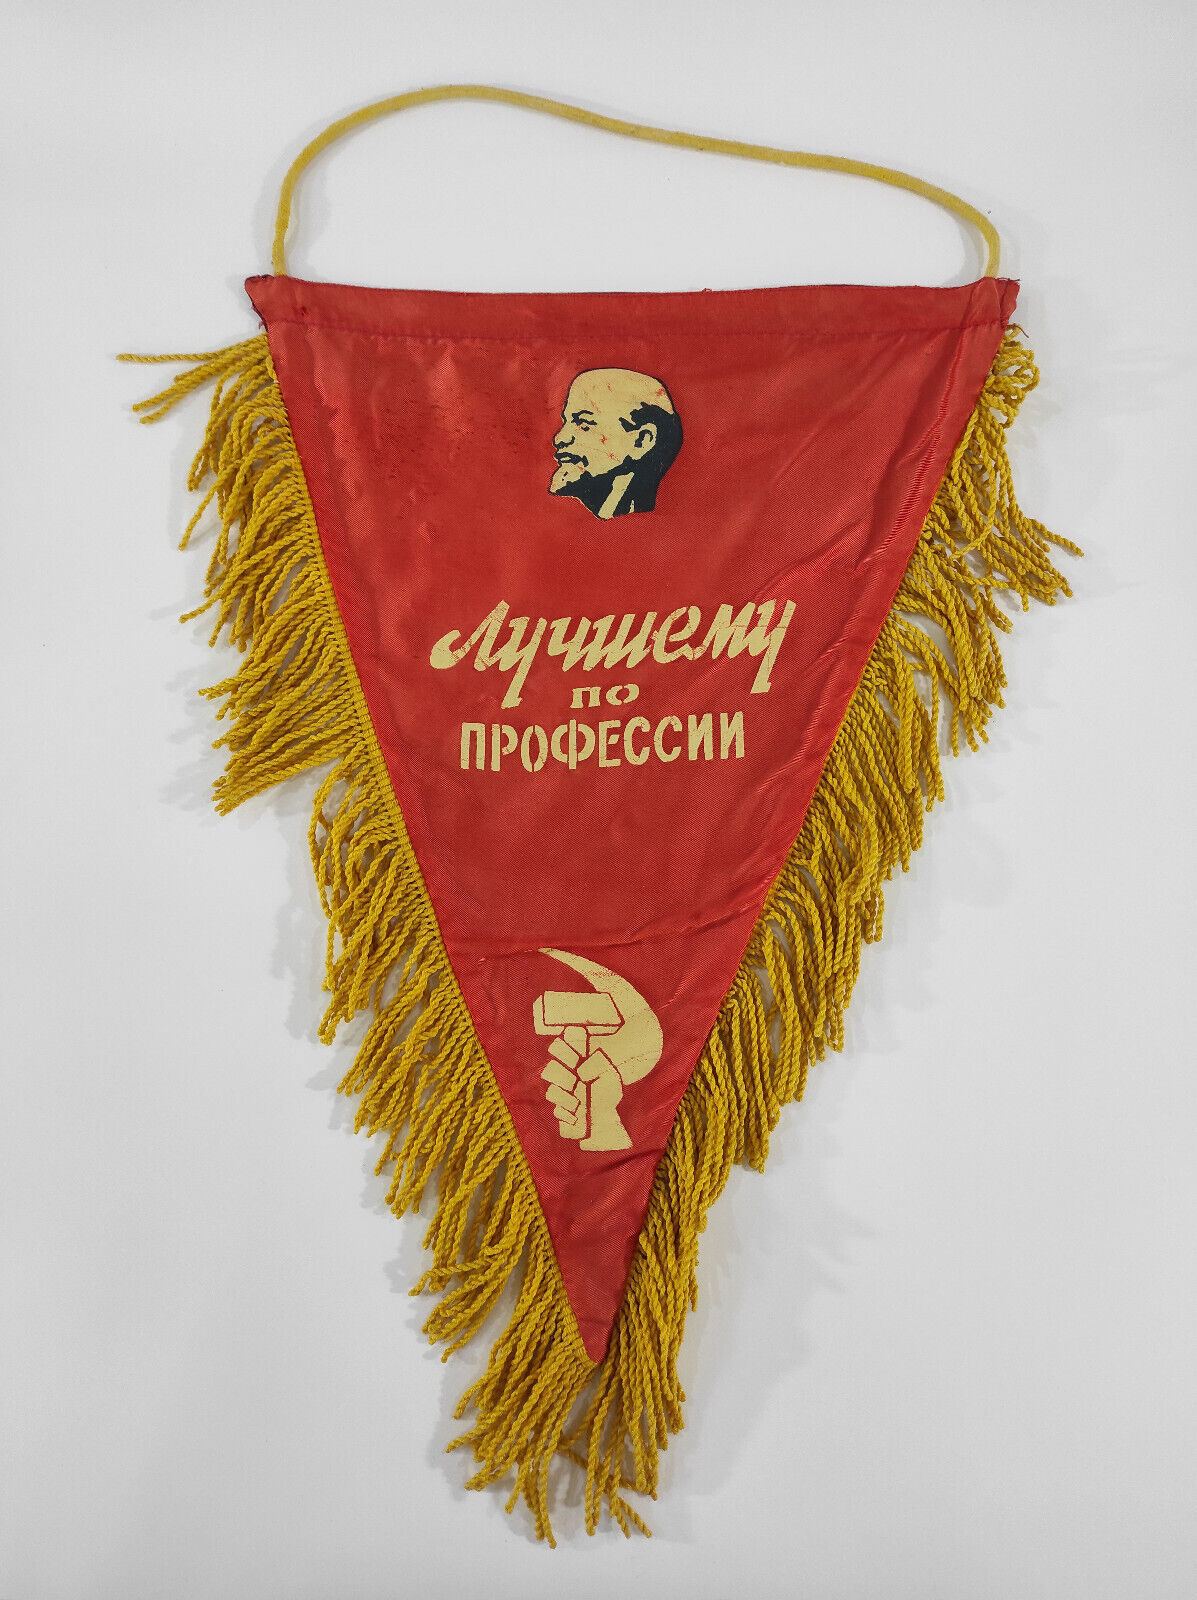 Soviet pennant, 